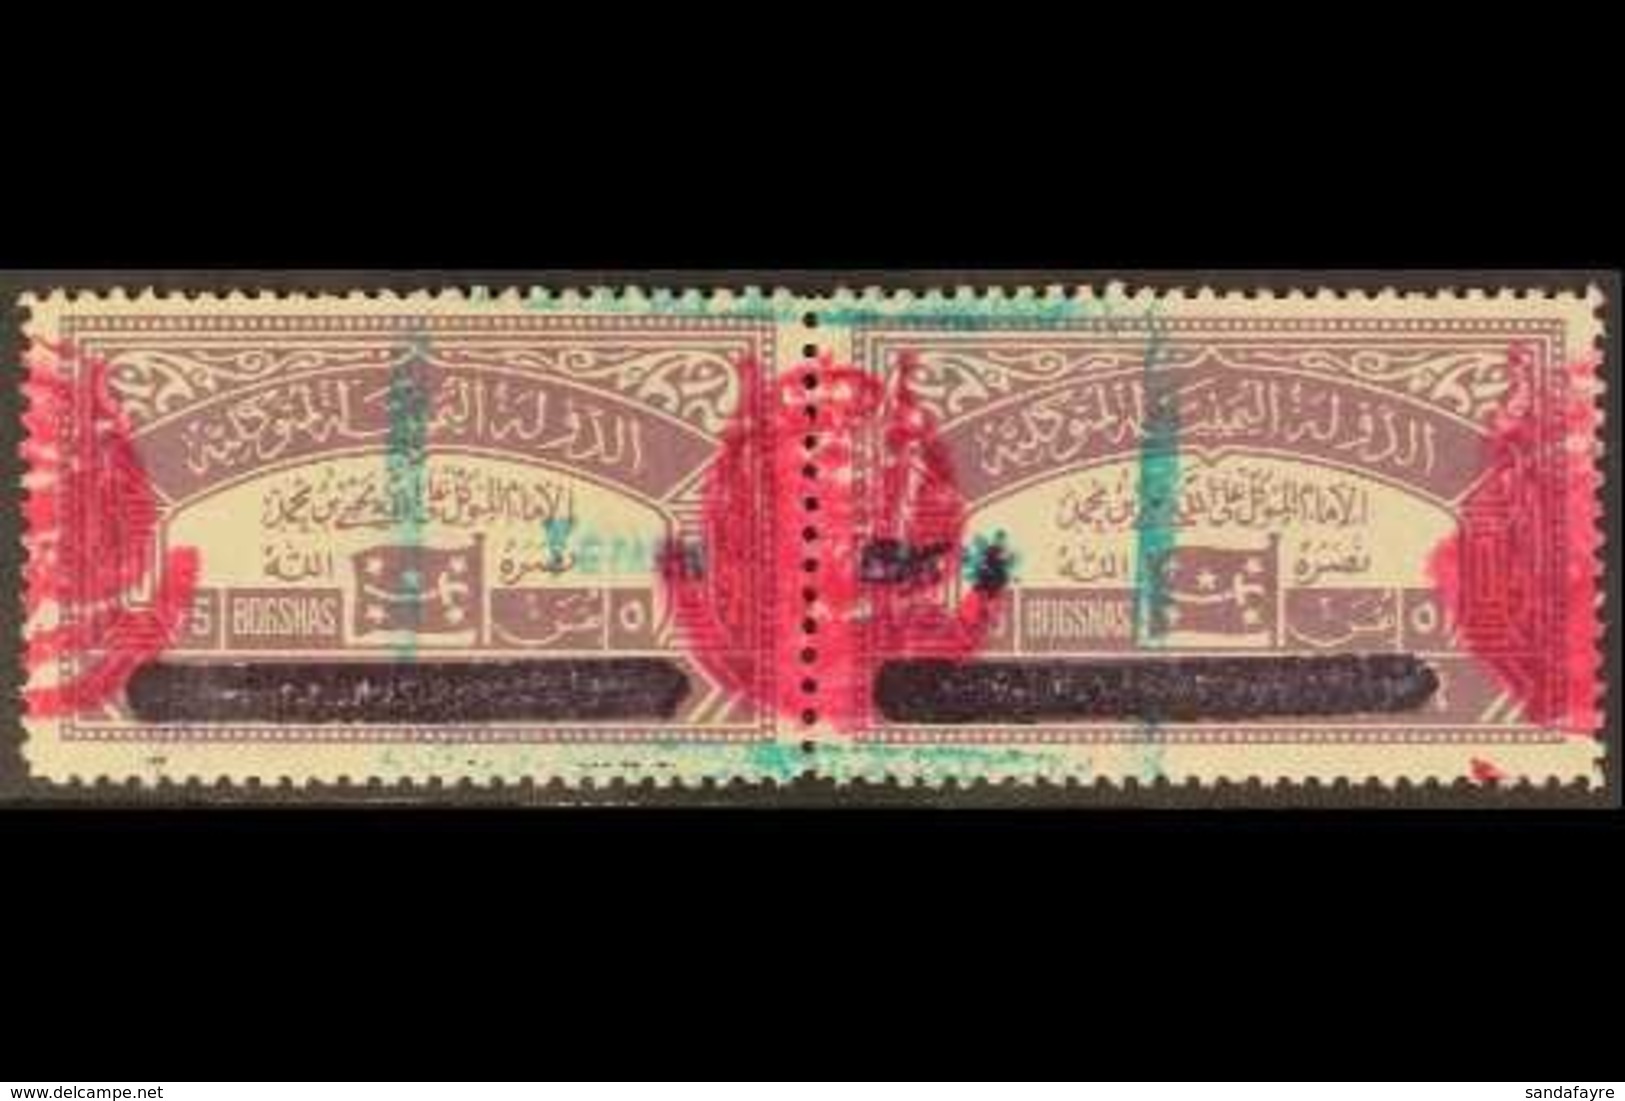 ROYALIST CIVIL WAR ISSUES  1964 10b (5b + 5b) Dull Purple Consular Fee Stamp Overprinted, Horizontal Pair Issued At Al-M - Jemen